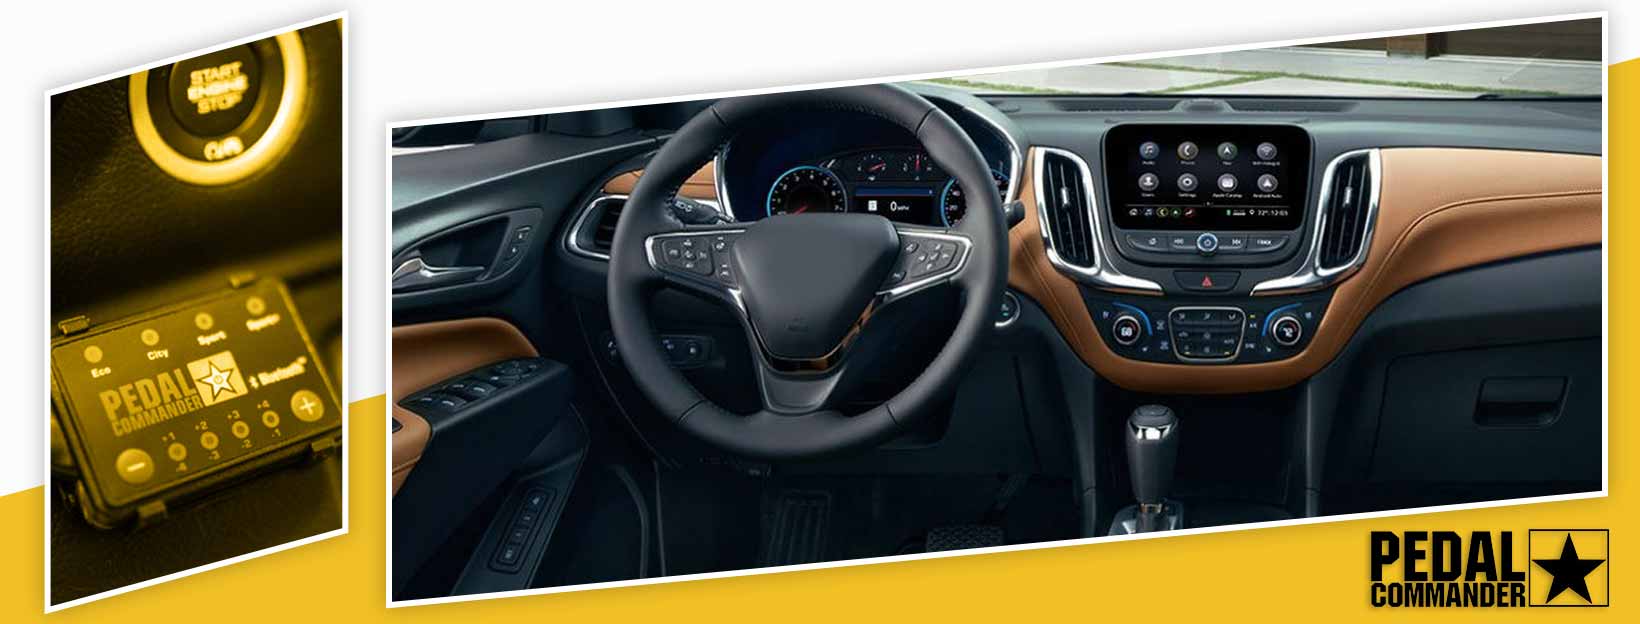 Pedal Commander for Chevrolet Equinox - interior